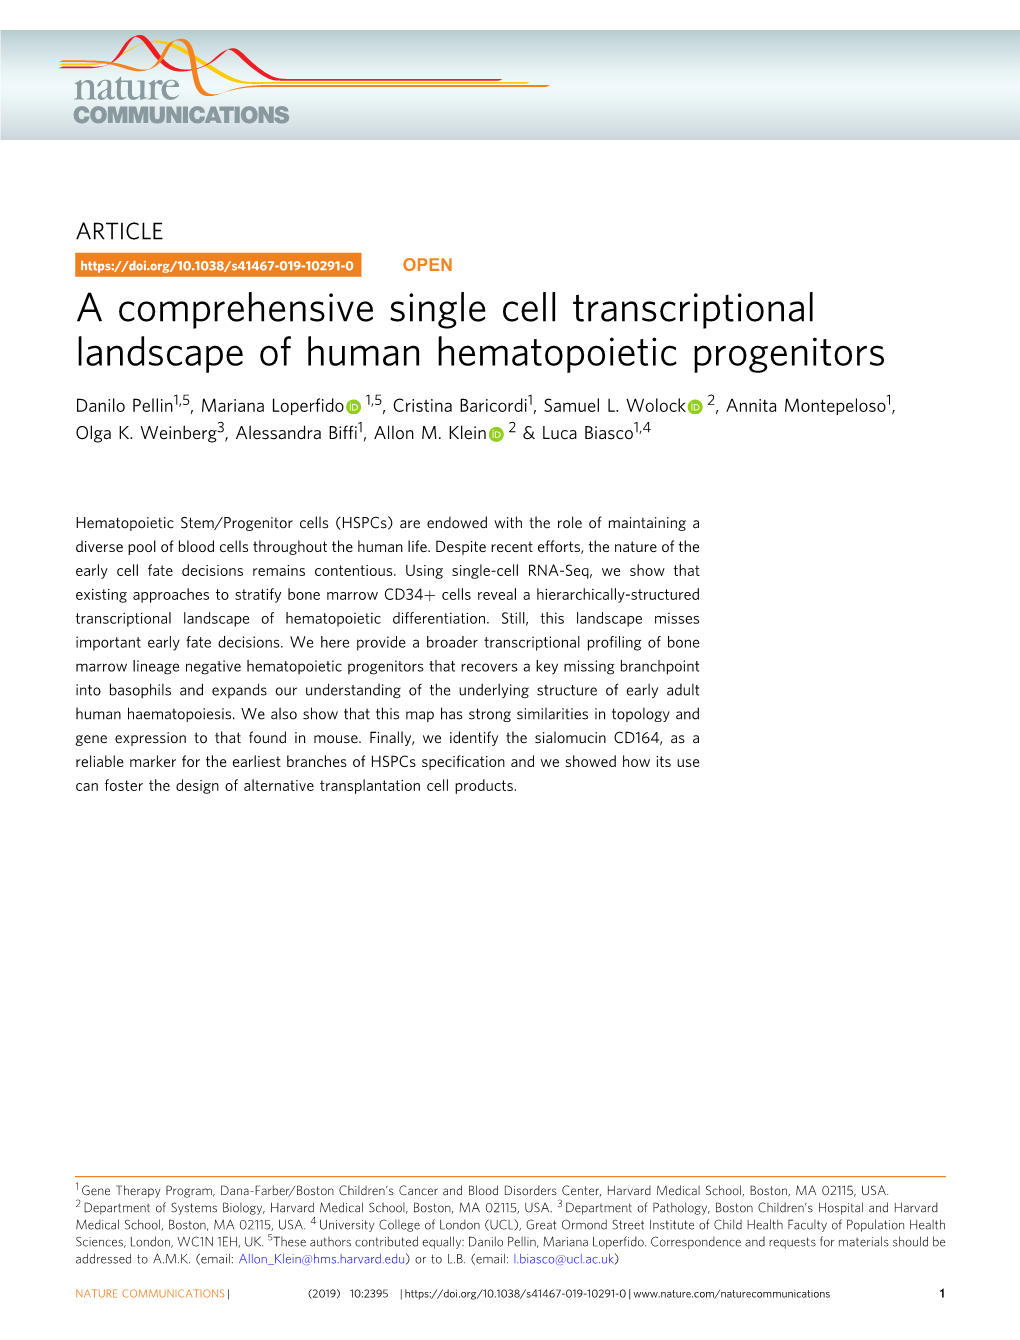 A Comprehensive Single Cell Transcriptional Landscape of Human Hematopoietic Progenitors